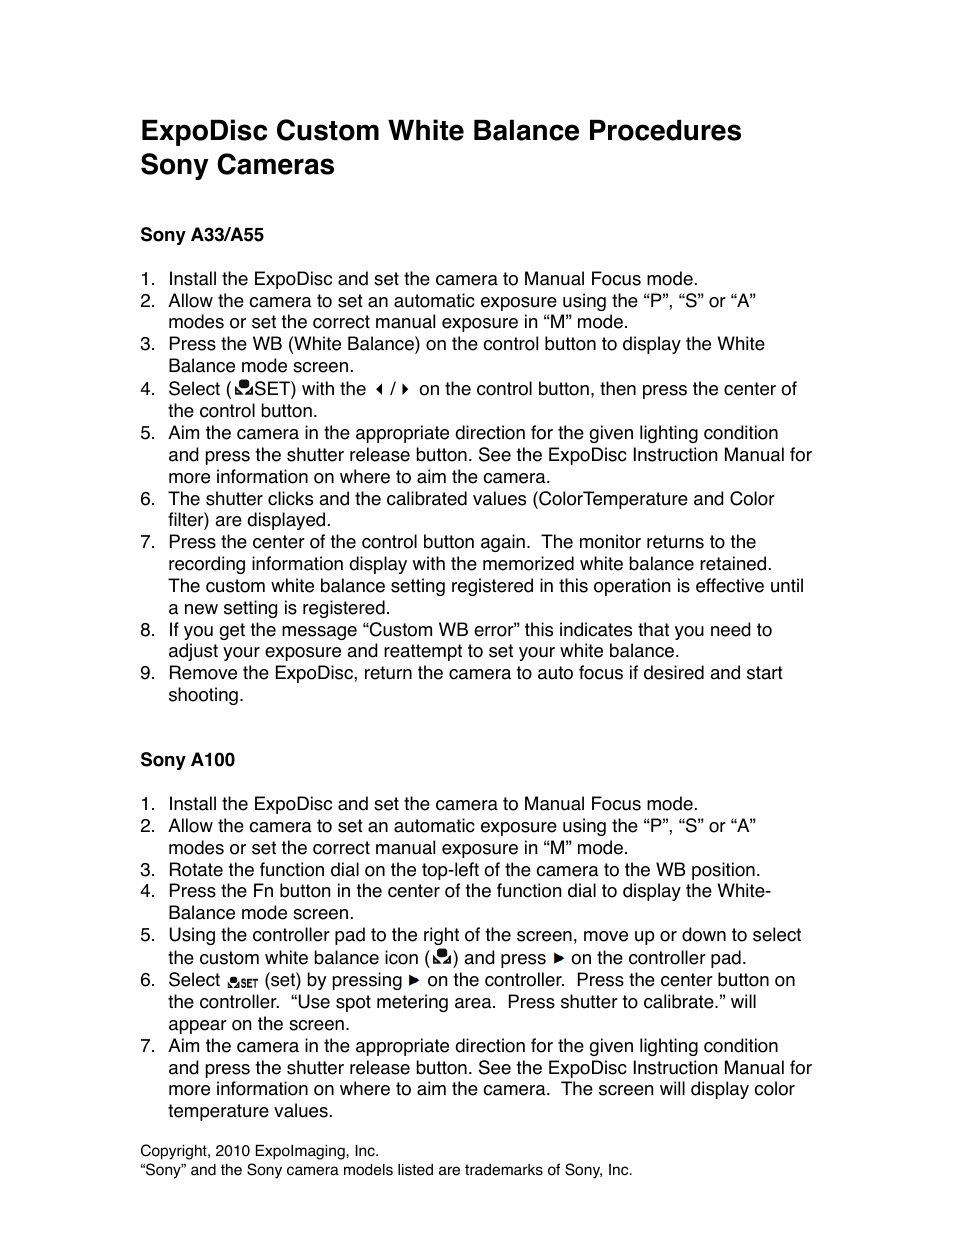 ExpoDisc: Sony Custom WB